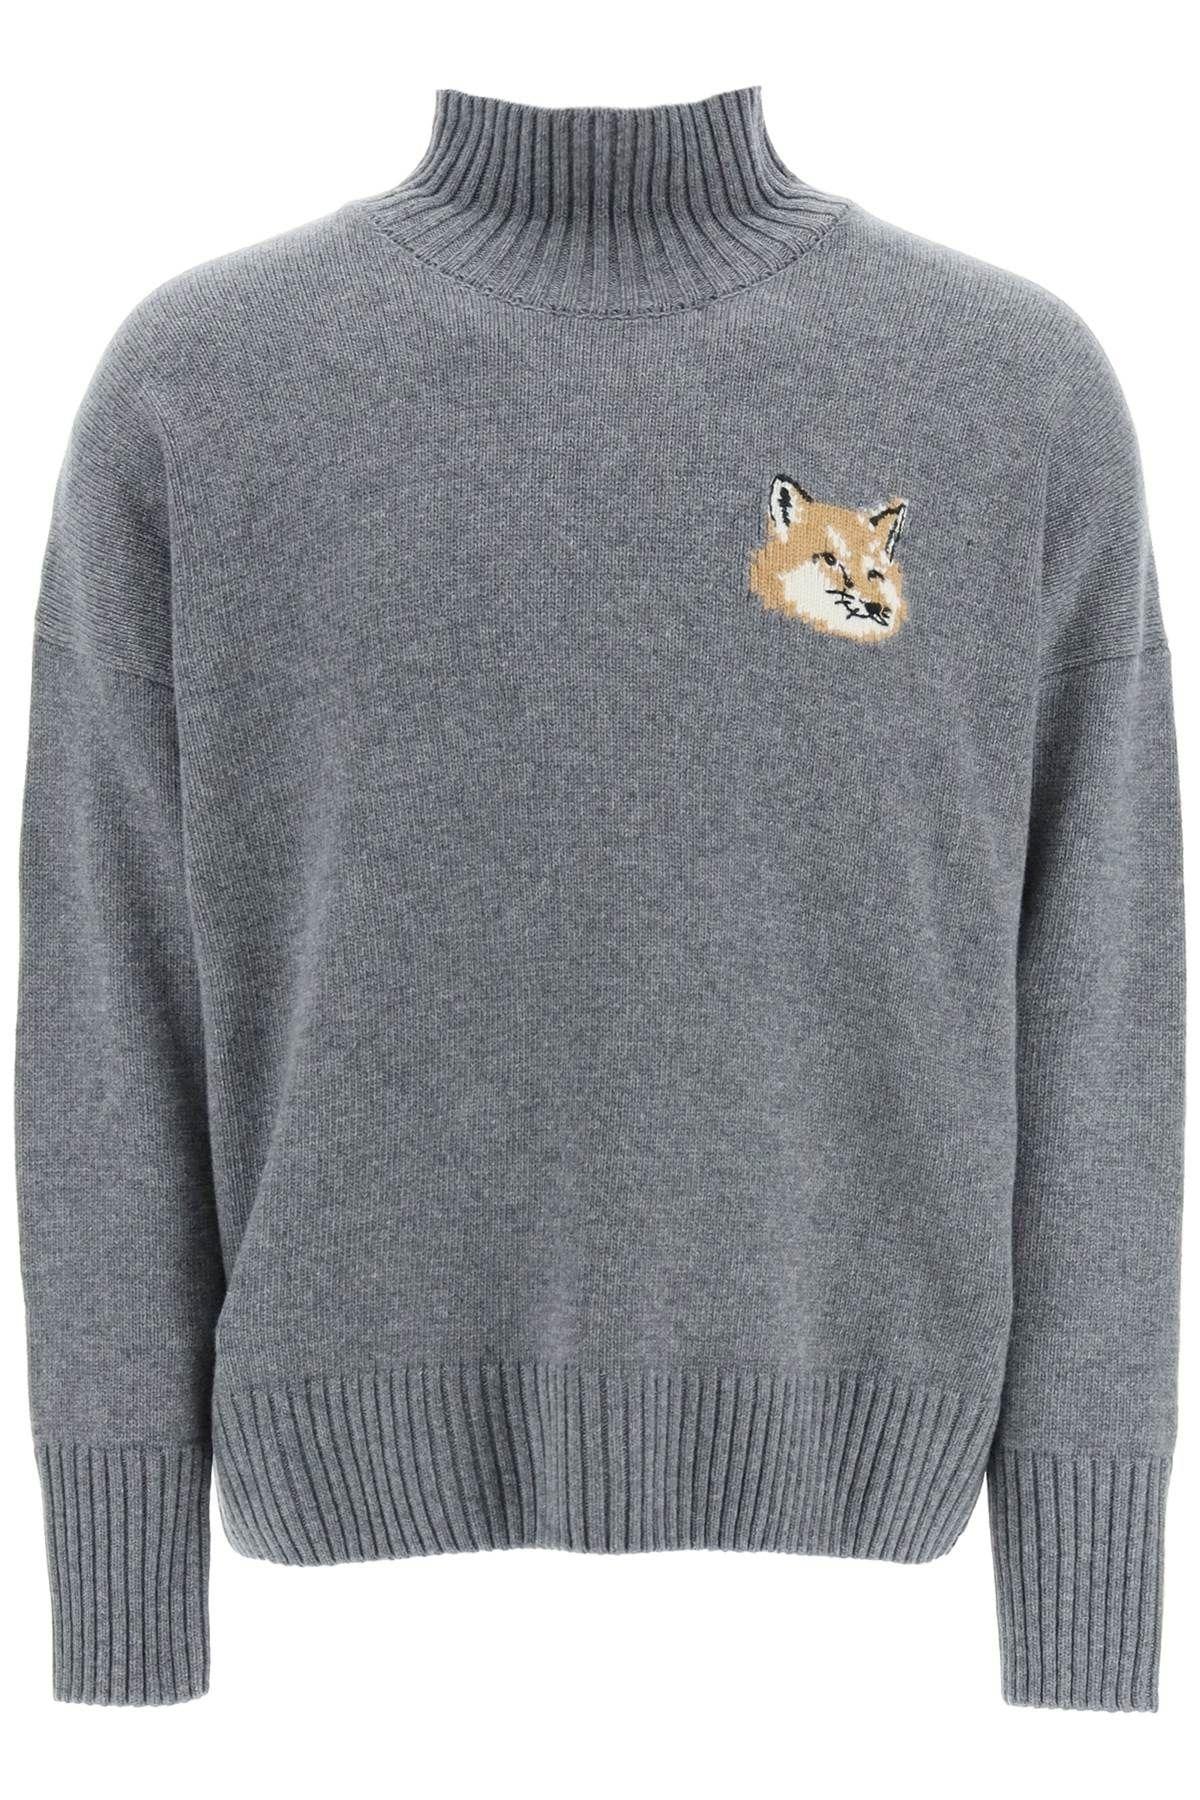 Maison Kitsuné Turtleneck Sweater With Fox Intarsia